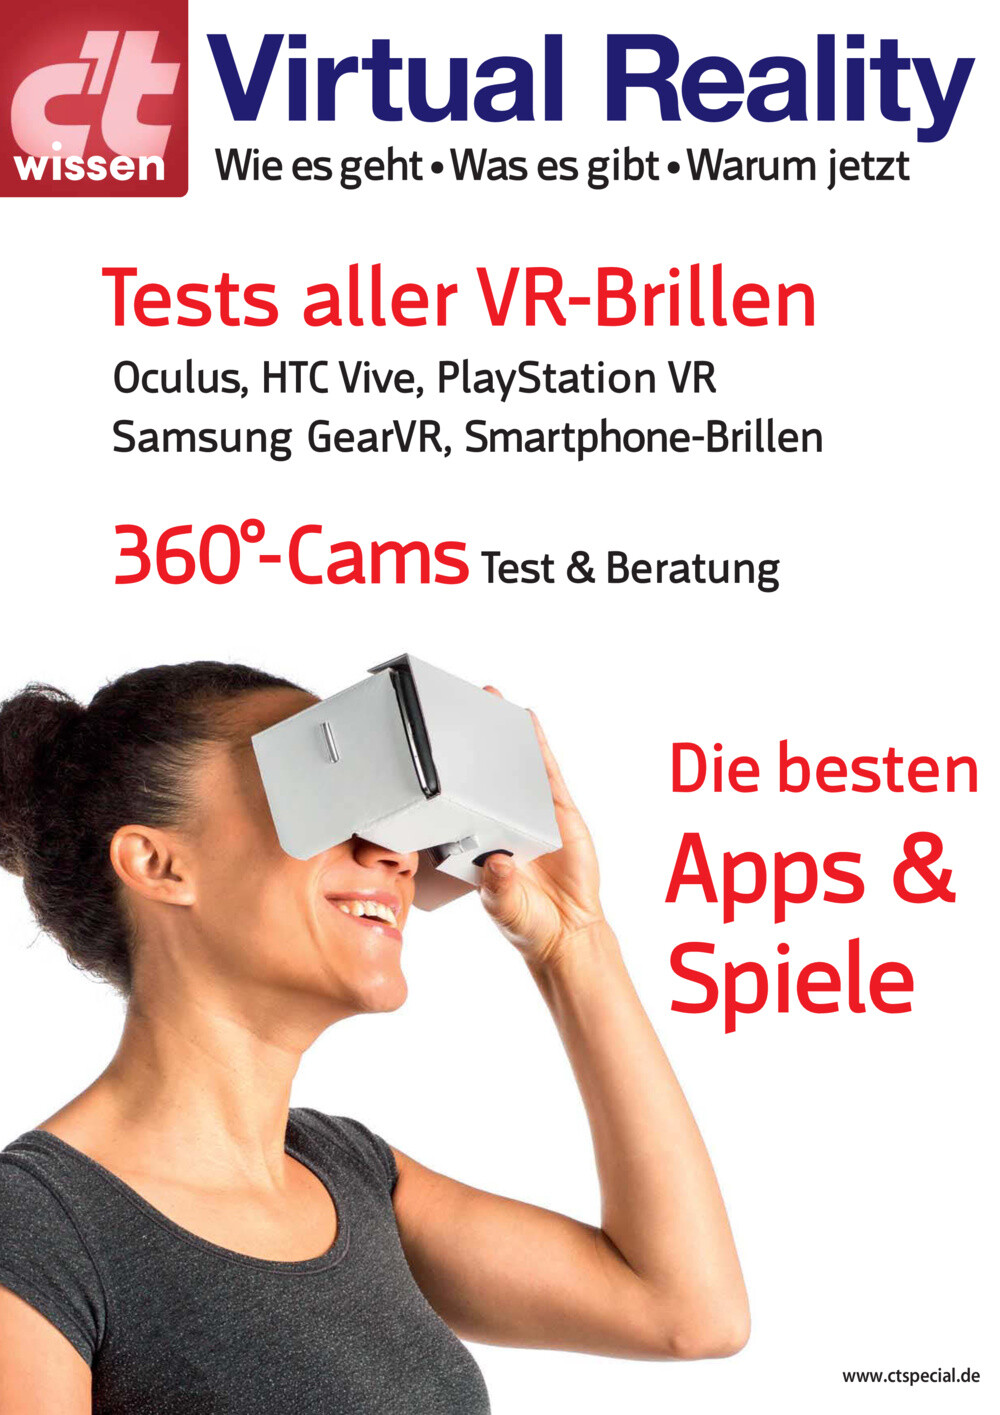 c't wissen Virtual Reality 2016